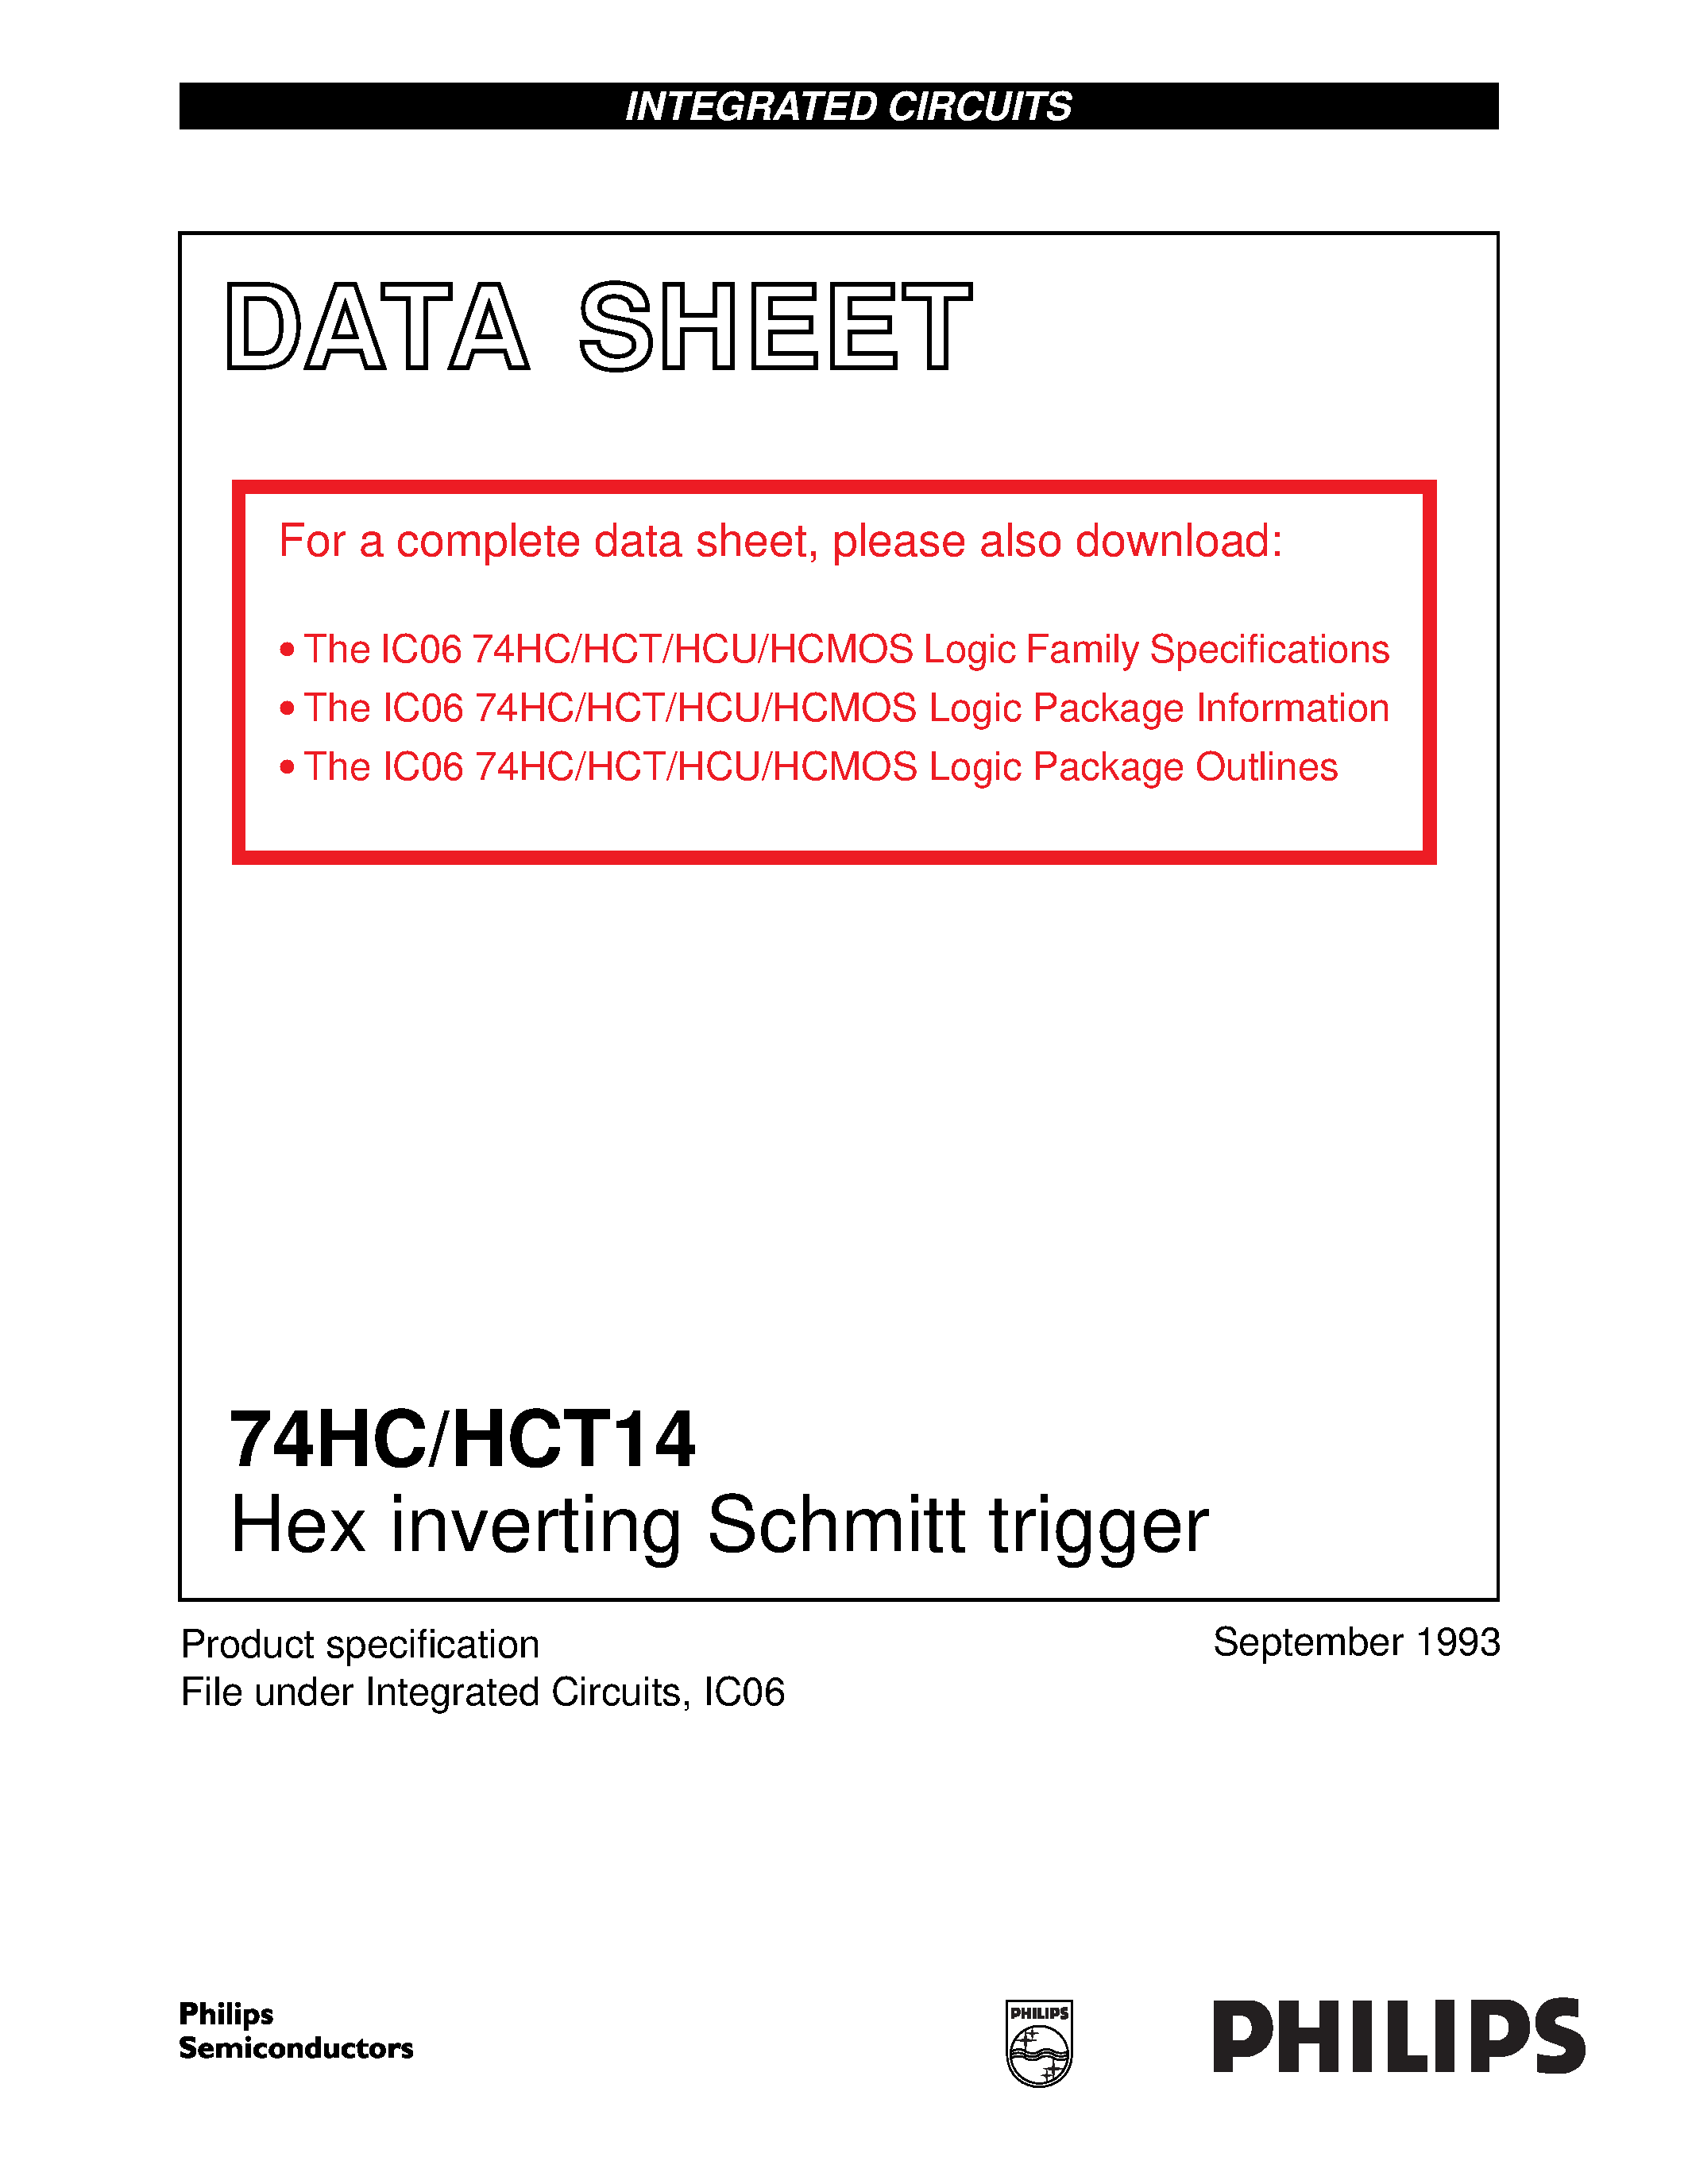 Datasheet 74HCT14 - Hex inverting Schmitt trigger page 1